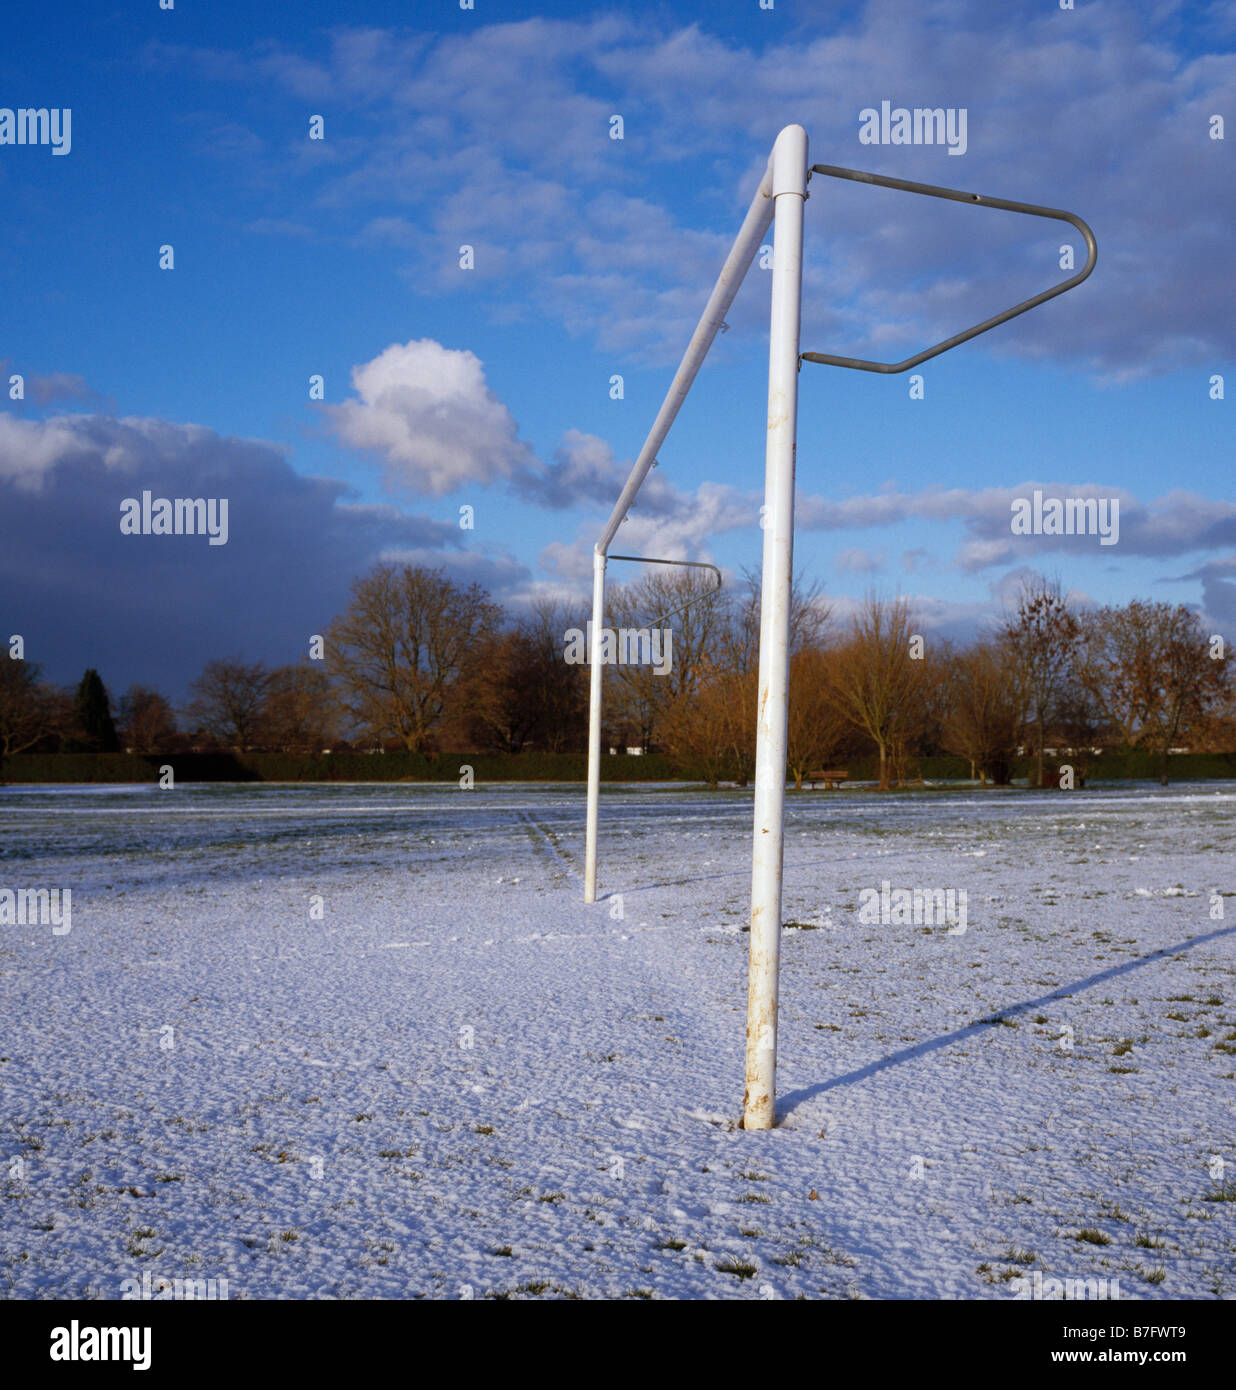 Goal Posts in snow. Biggin Hill, Bromley, Kent, England, UK. Stock Photo